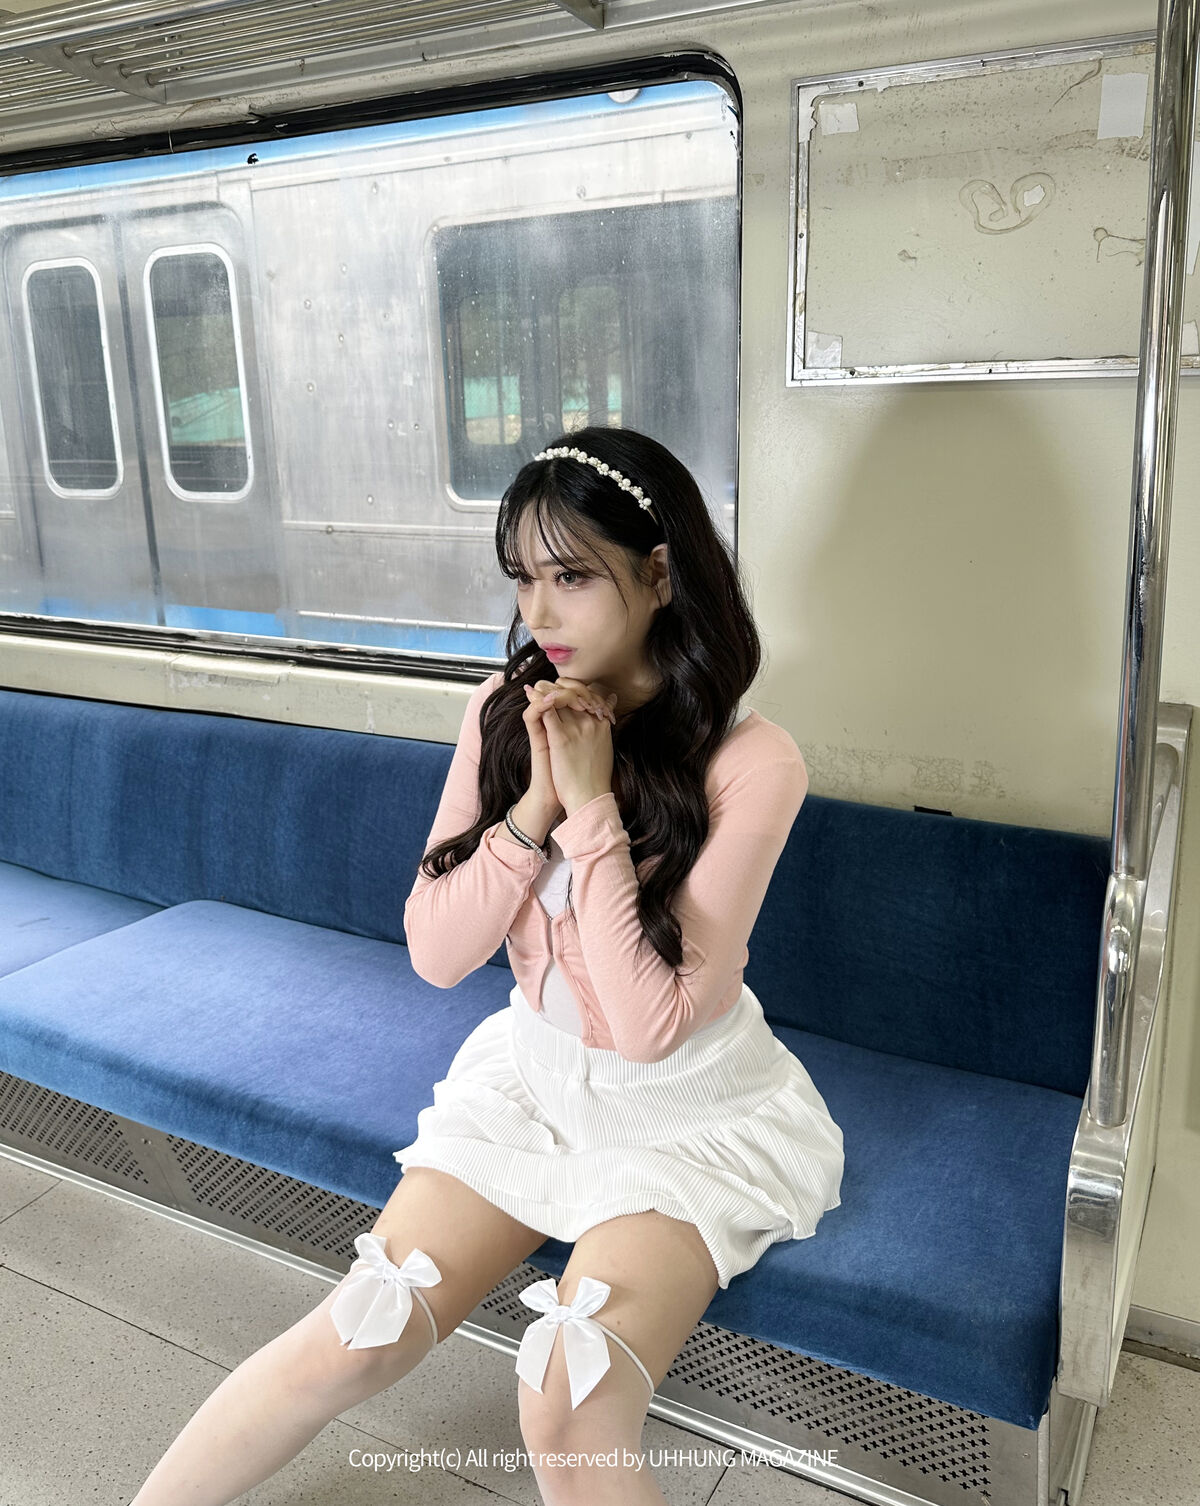 UHHUNG MAGAZINE Hani 하니 The Girlfriend On The Subway Part1 0007 5500628993.jpg